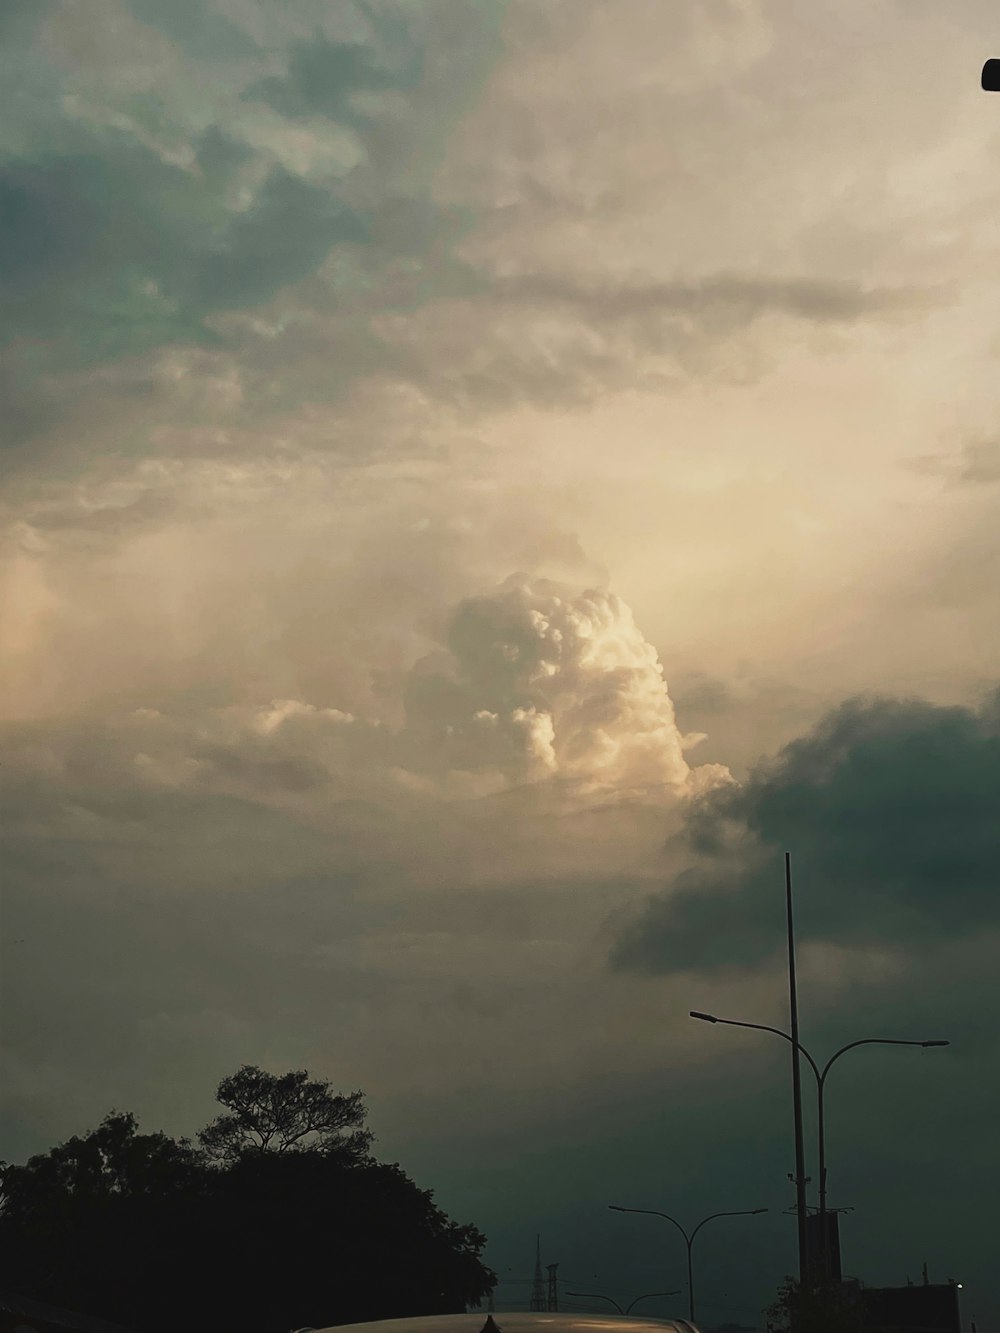 a cloudy sky with a street light and a car